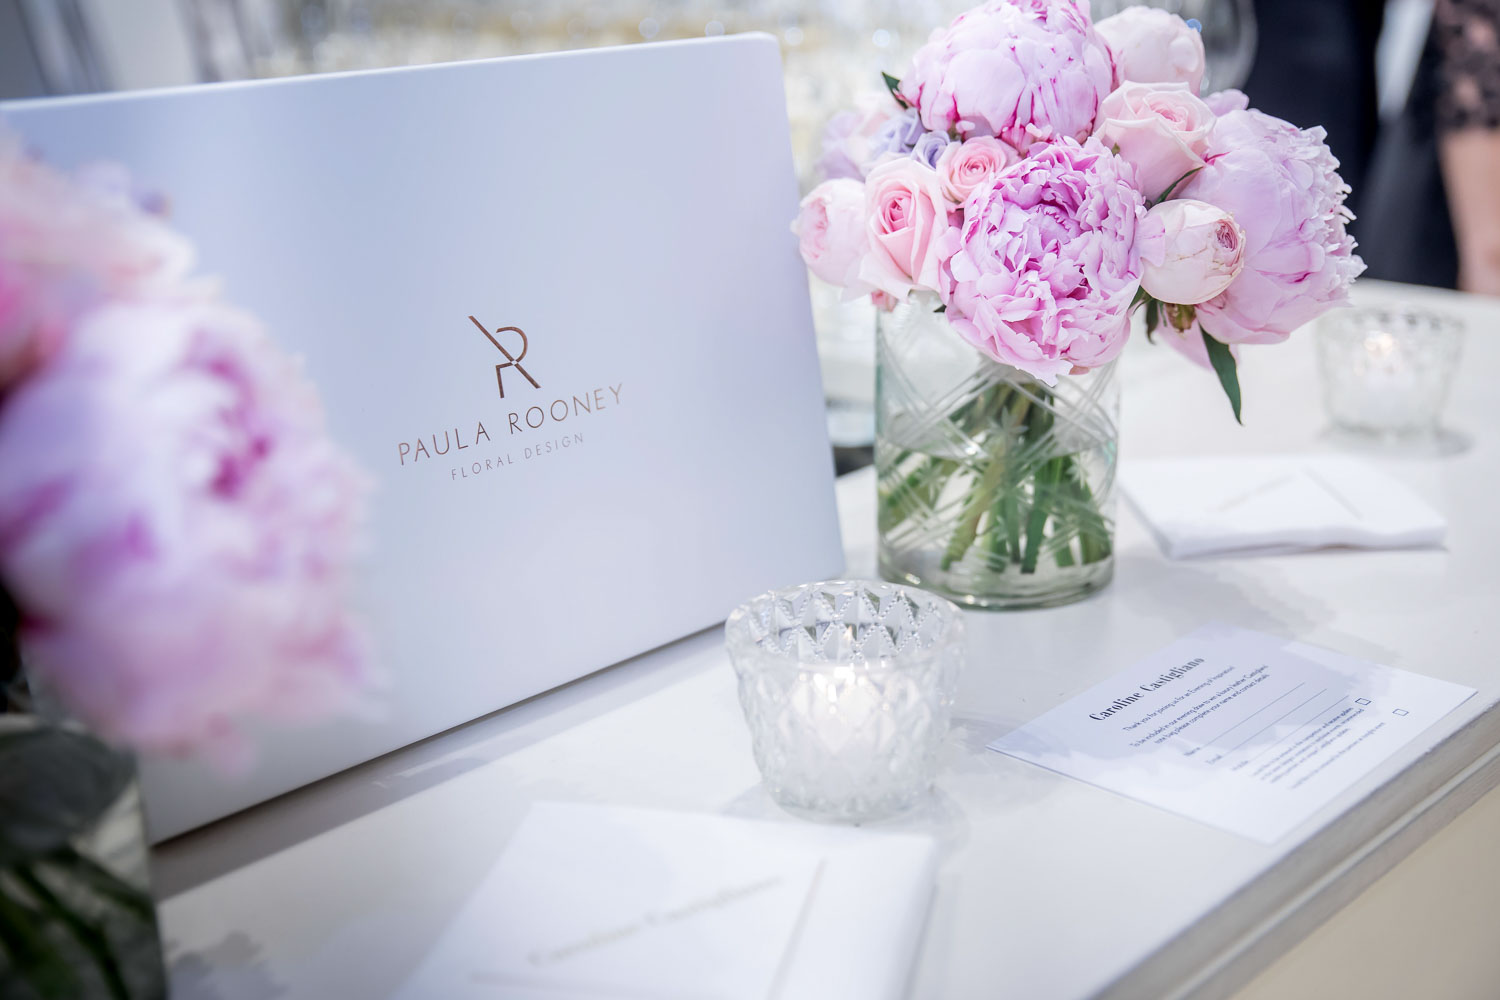 Paula Rooney Floral Design | Spotlight | Caroline Castigliano Evening